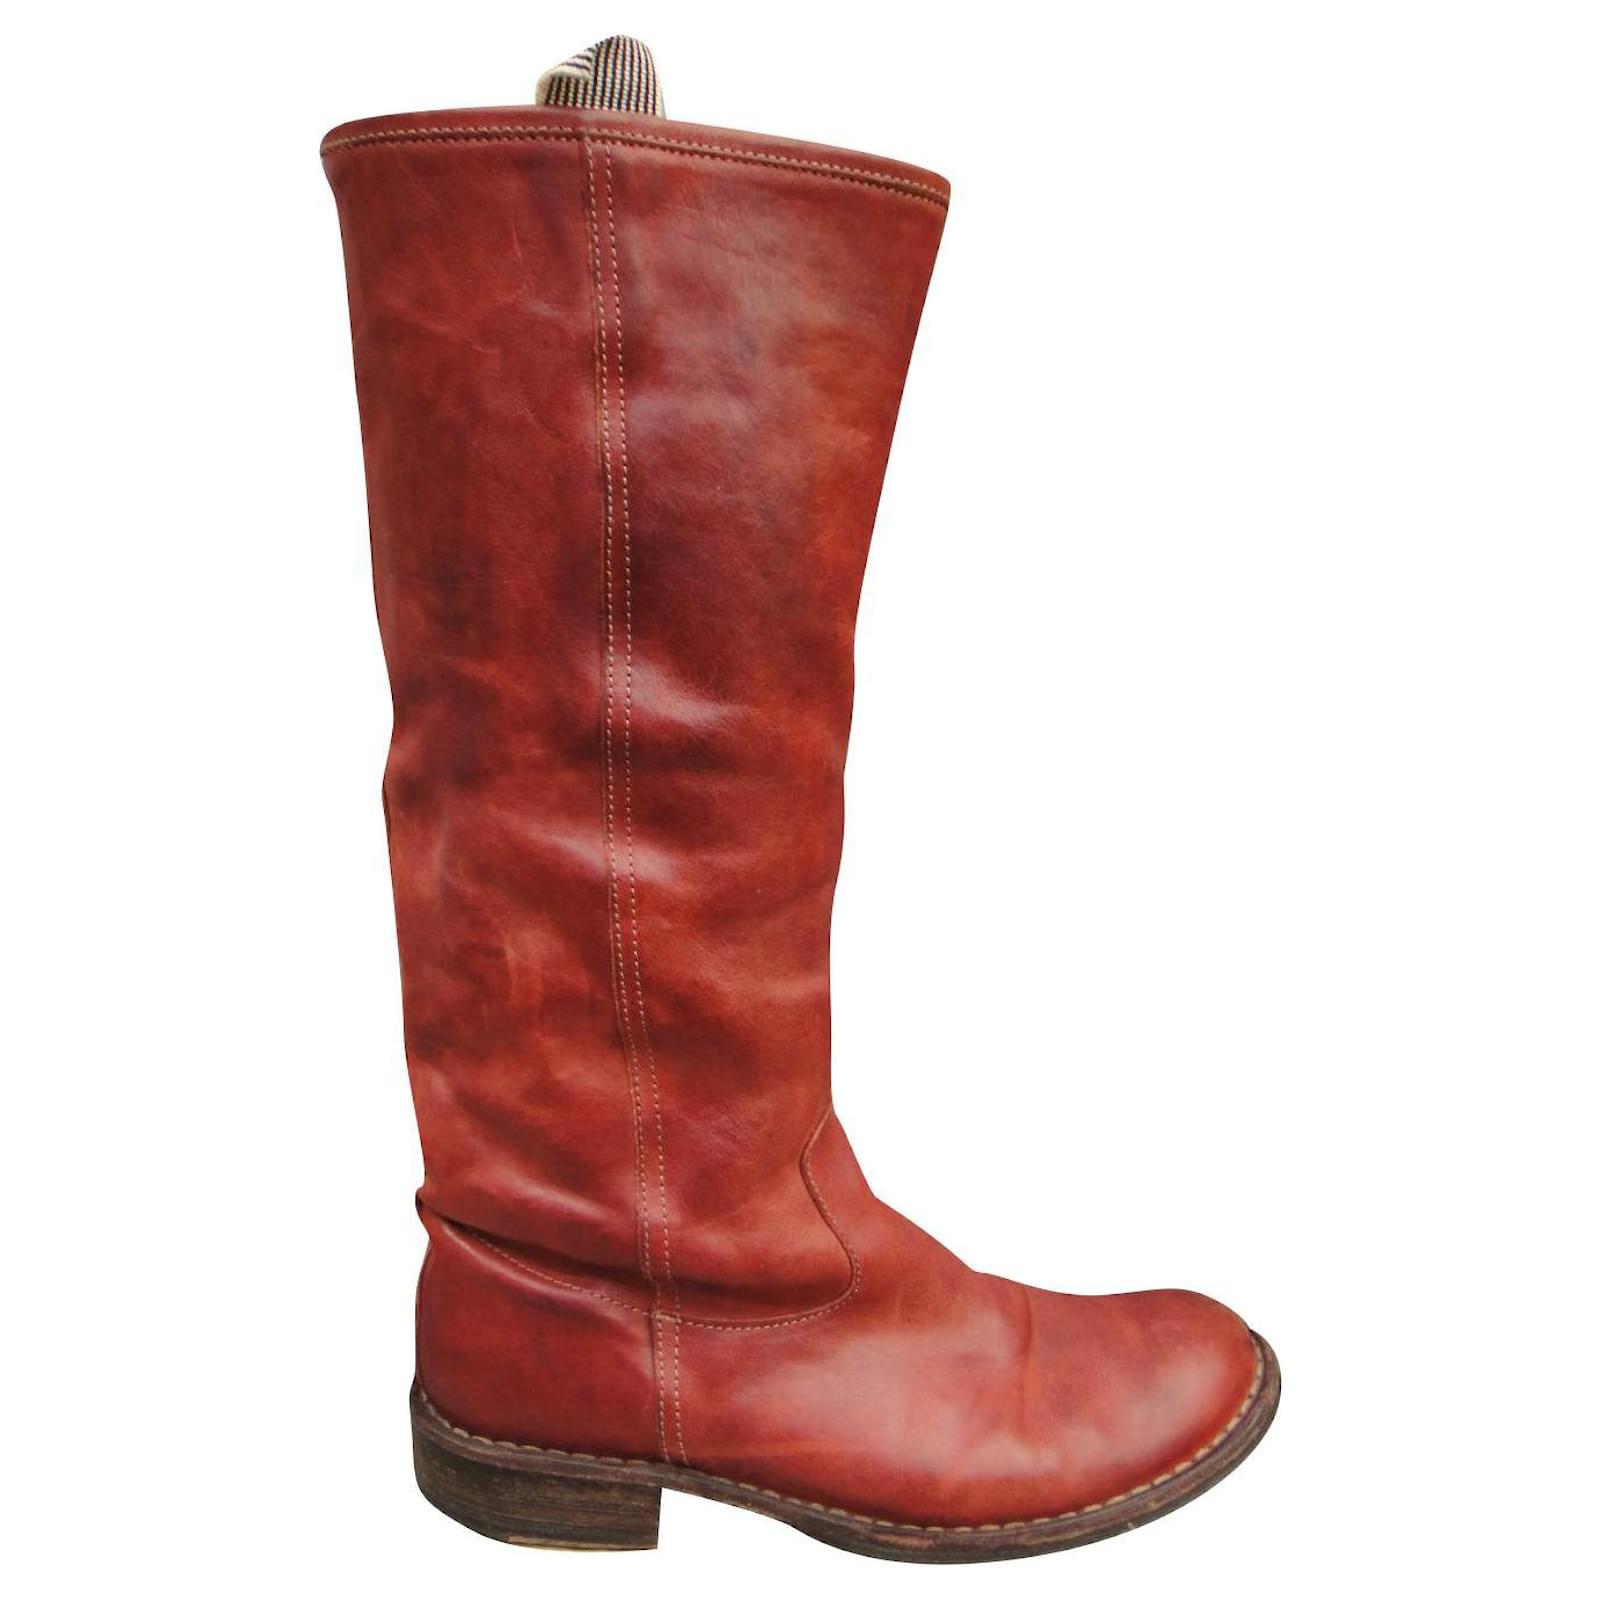 Fiorentini+Baker Fiorentini + Baker p boots 37 Red Leather ref 